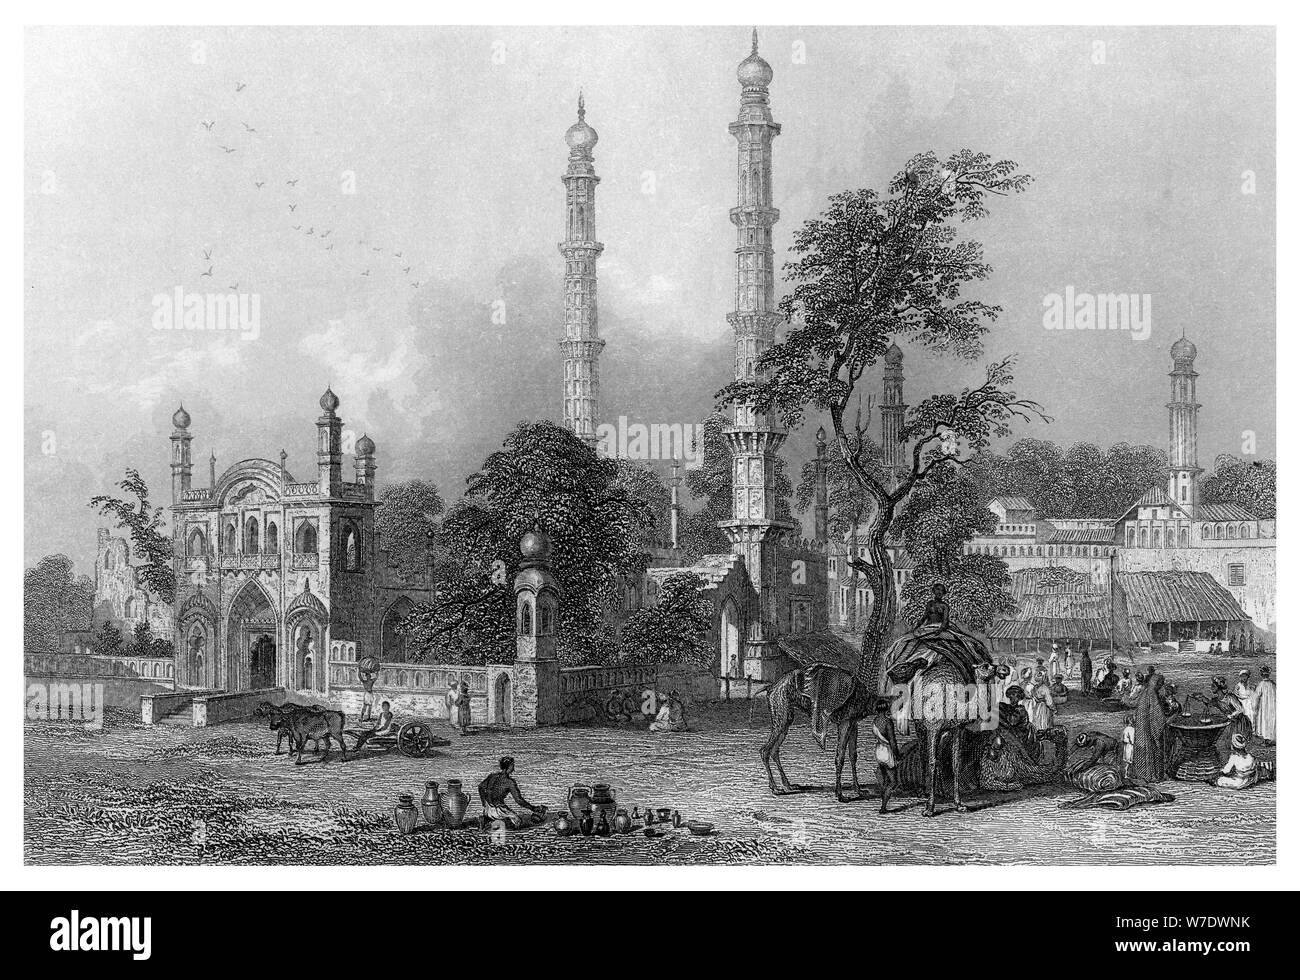 Mosque of Abdul Rahim Khan, Burhanpur, Madhya Pradesh, India.Artist: Finden Stock Photo